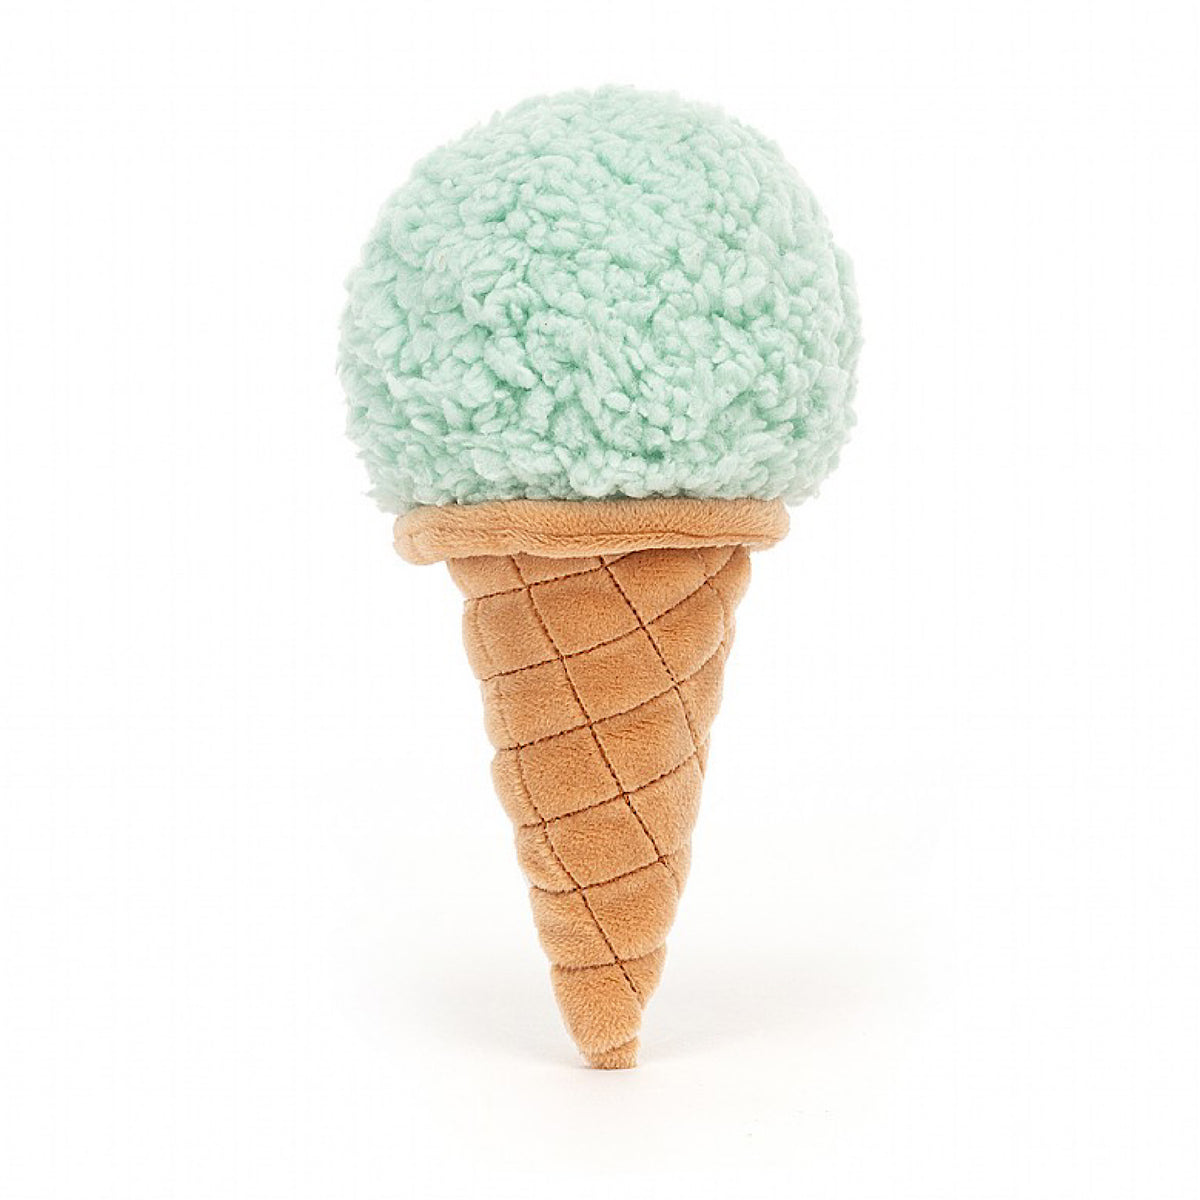 Irresistible Ice Cream, Mint